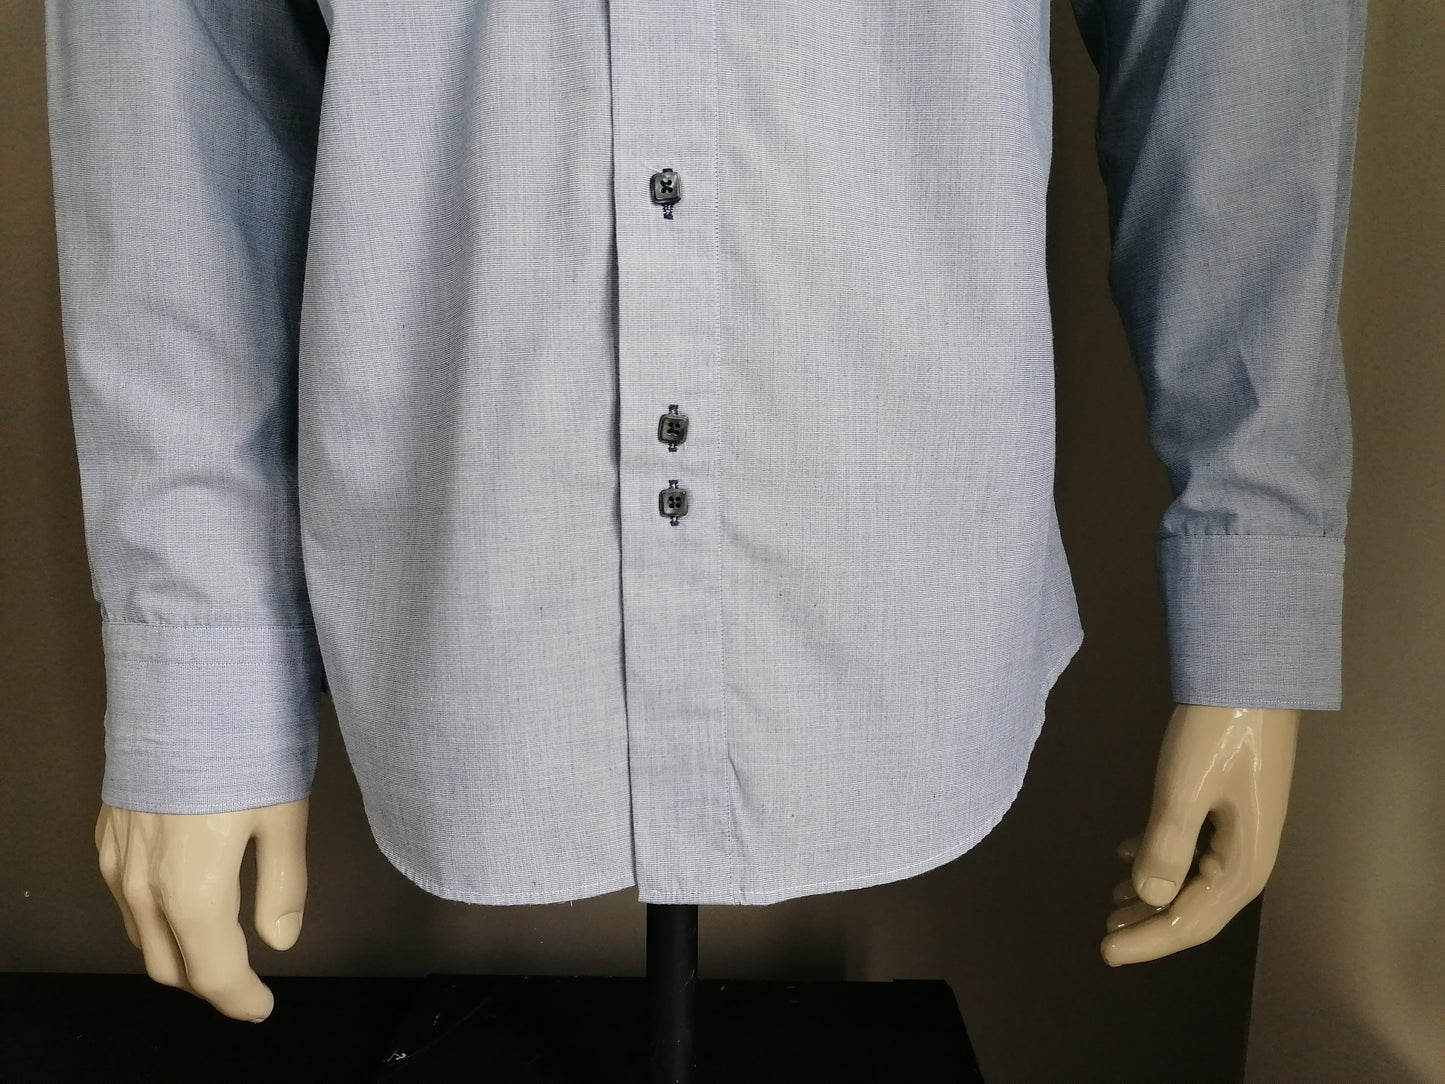 Doramafi overhemd. Blauw Wit motief. Maat XL / L